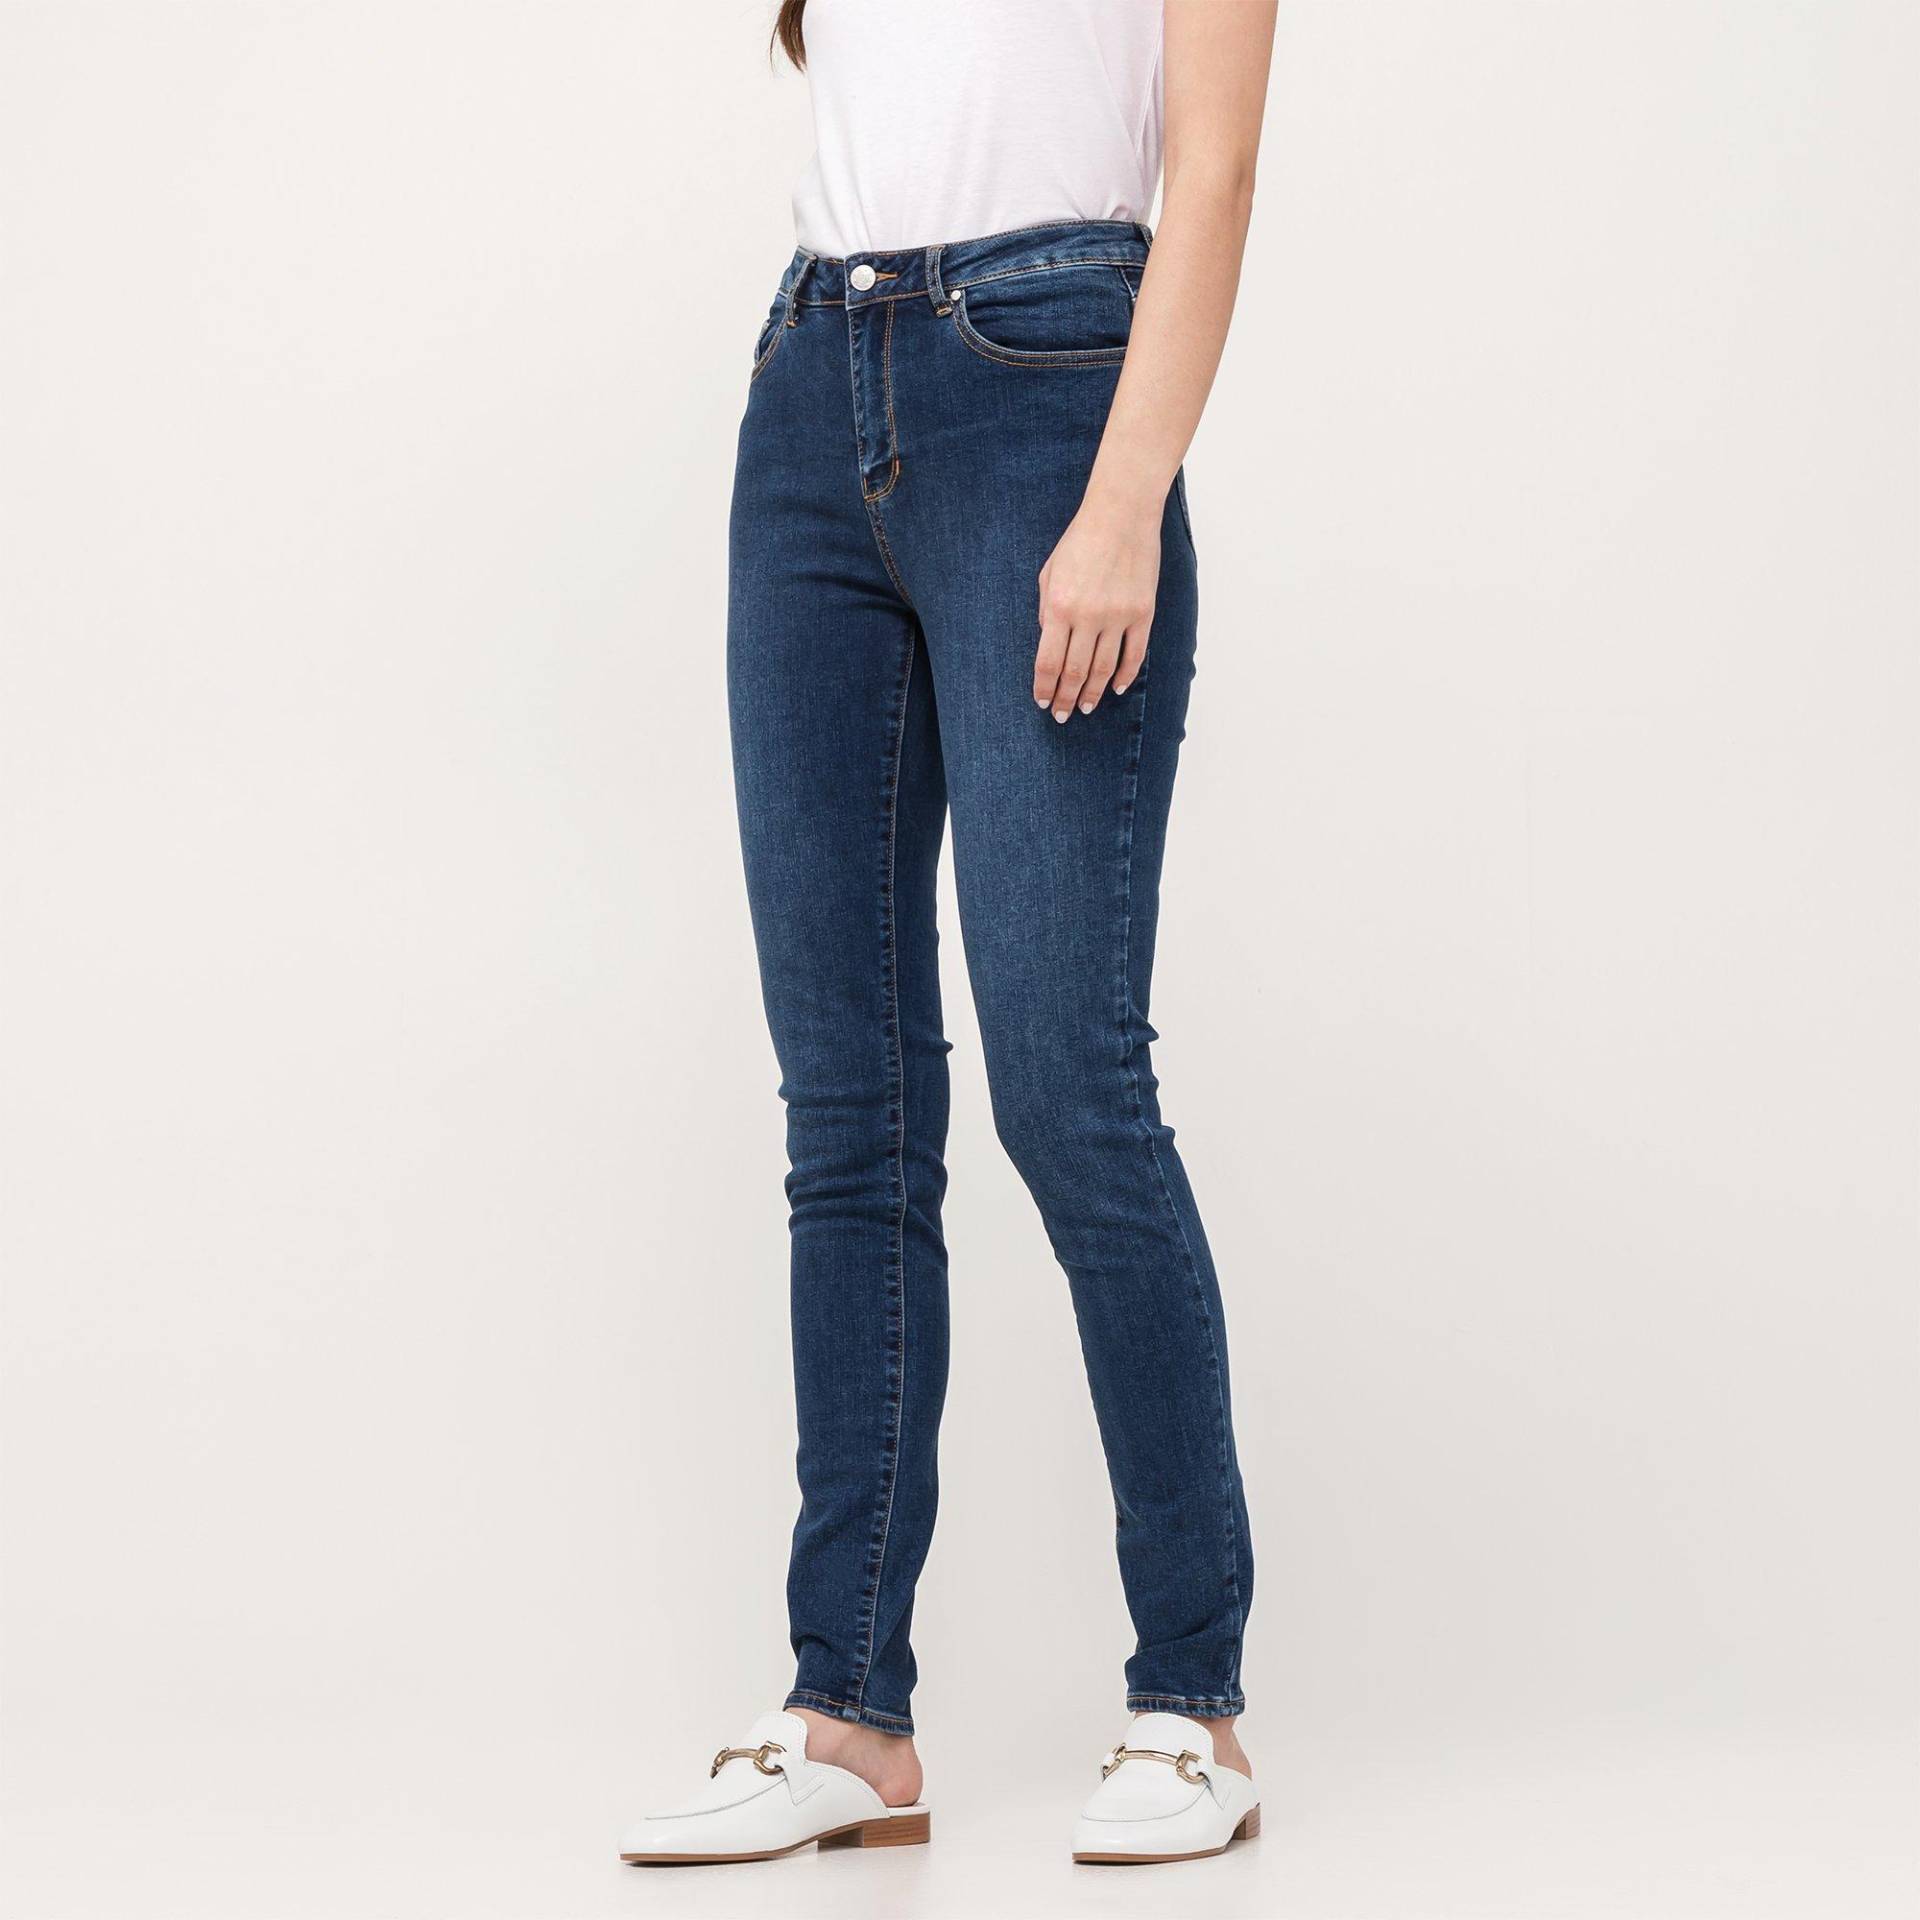 Jeans, Slim Fit Damen Blau Denim L30/W42 von Manor Woman